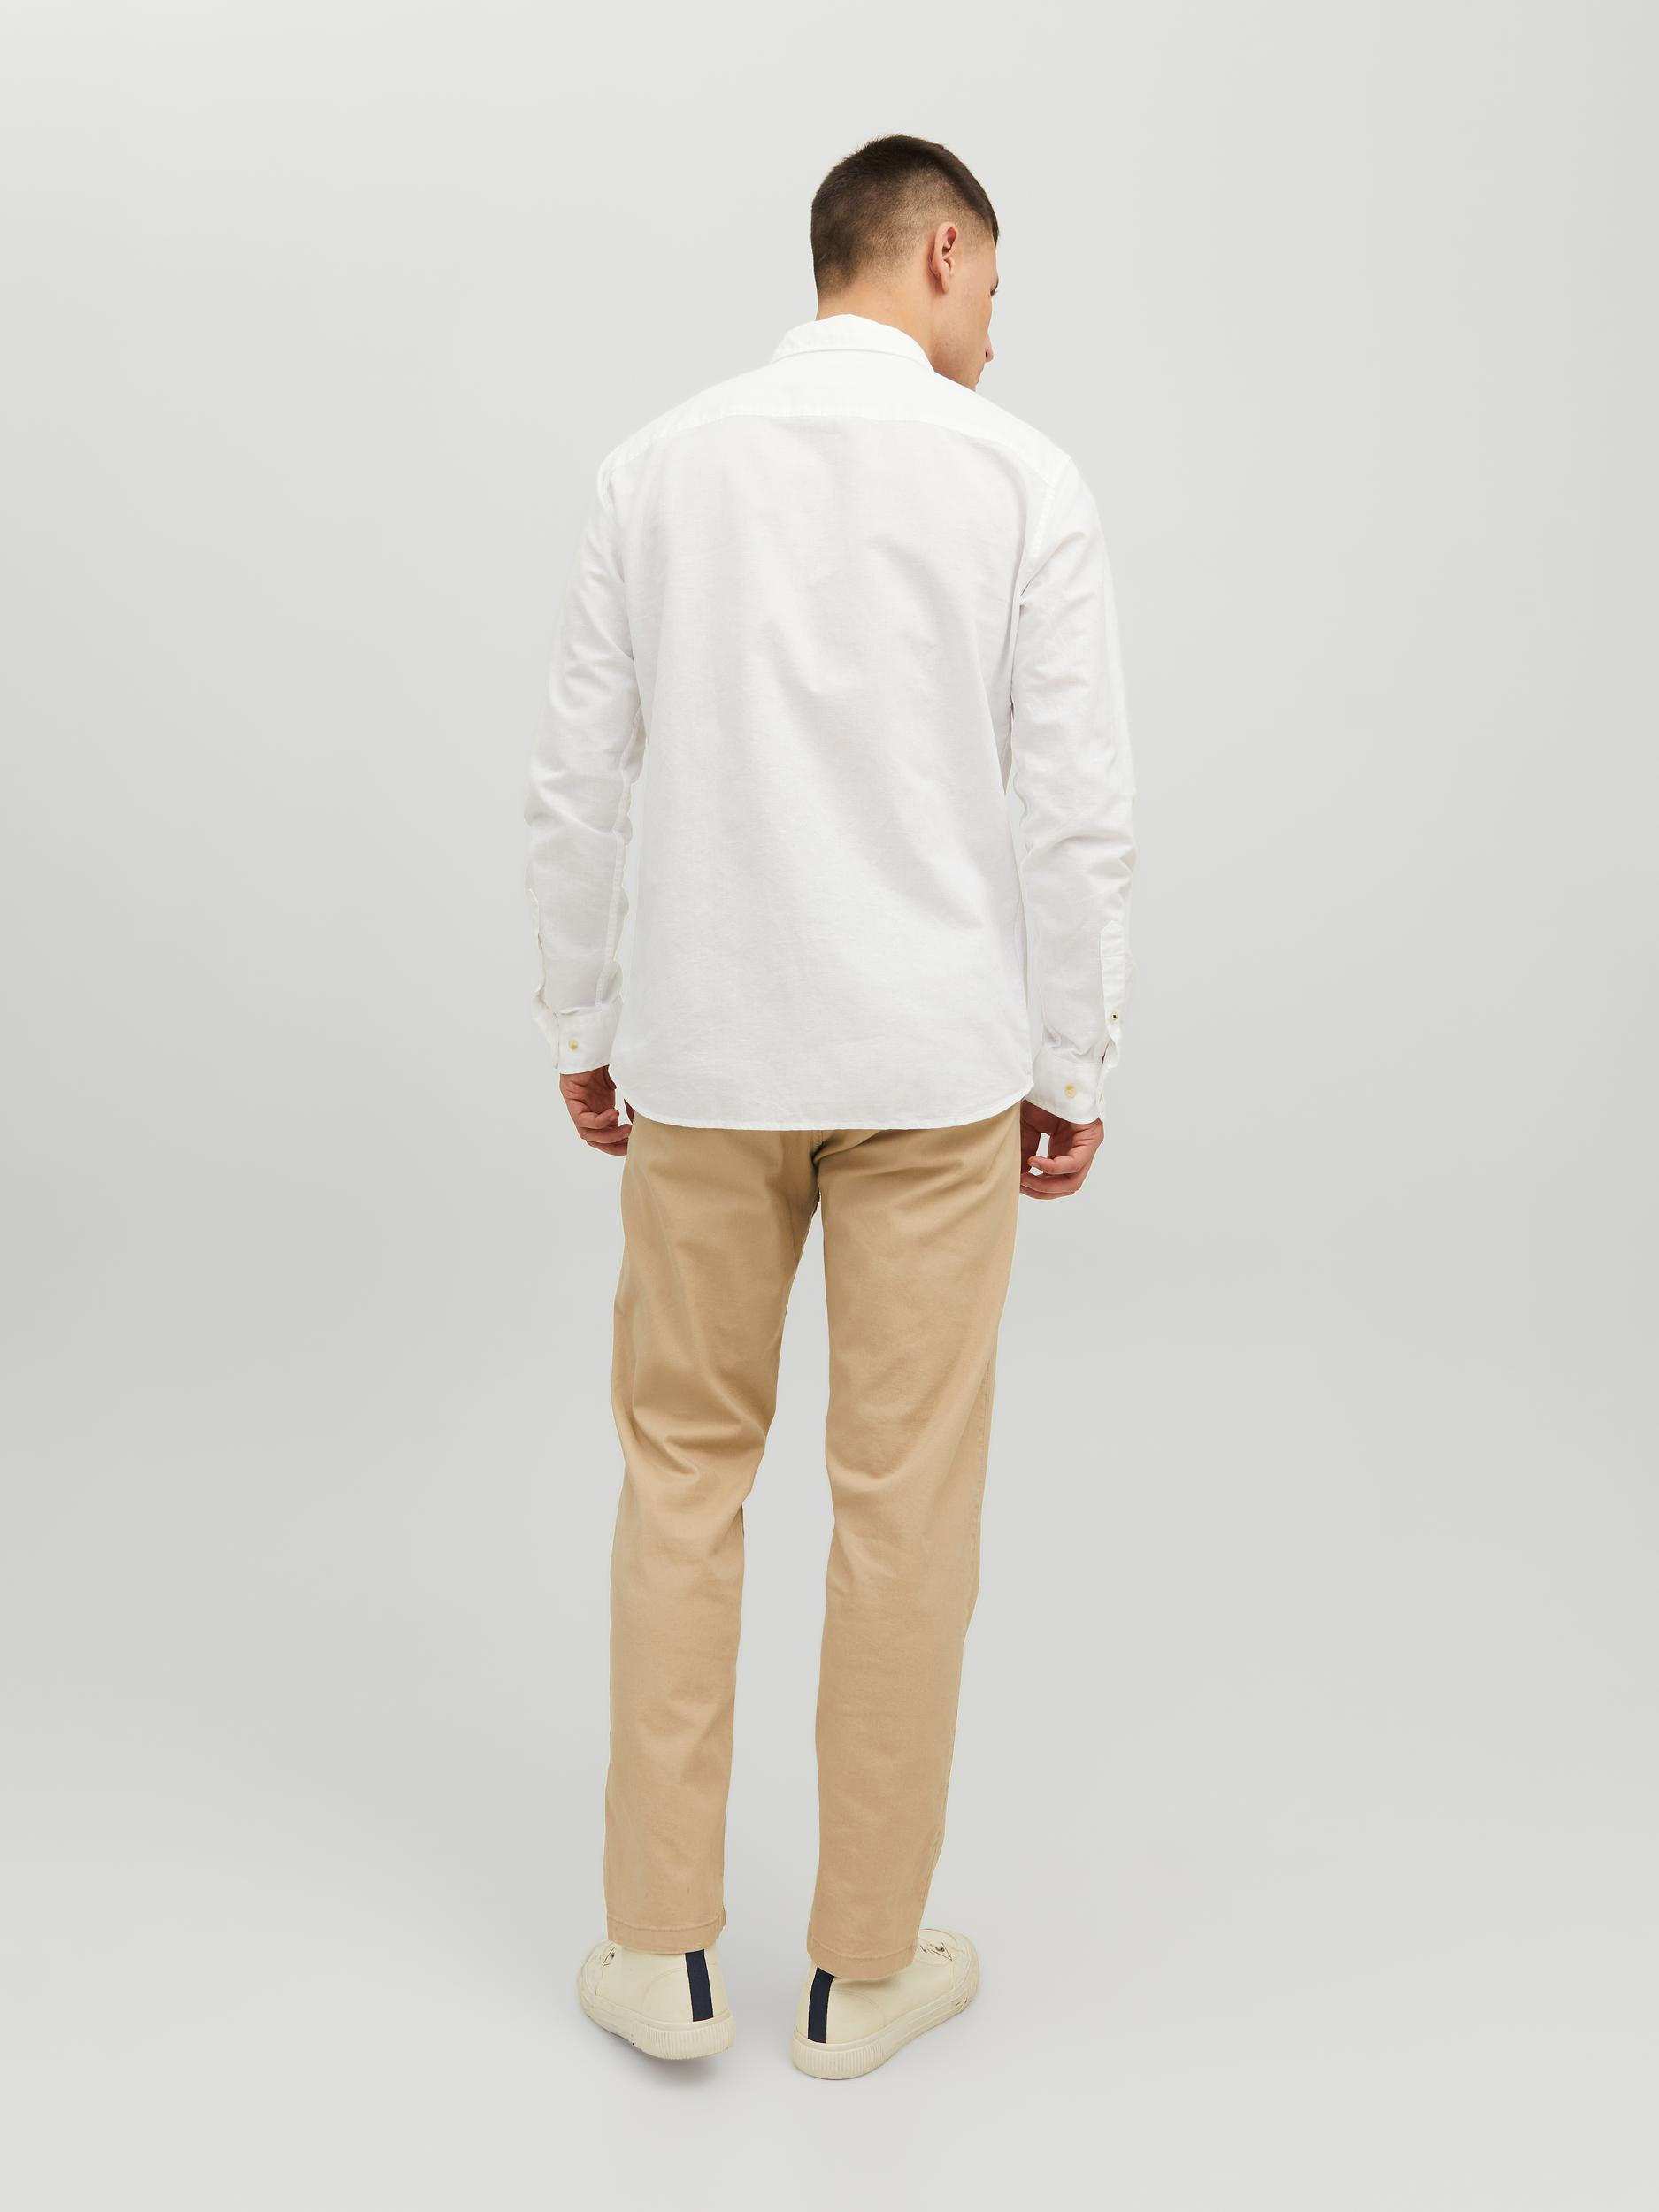 Jack & Jones - Camicia slim fit, Bianco, large image number 2